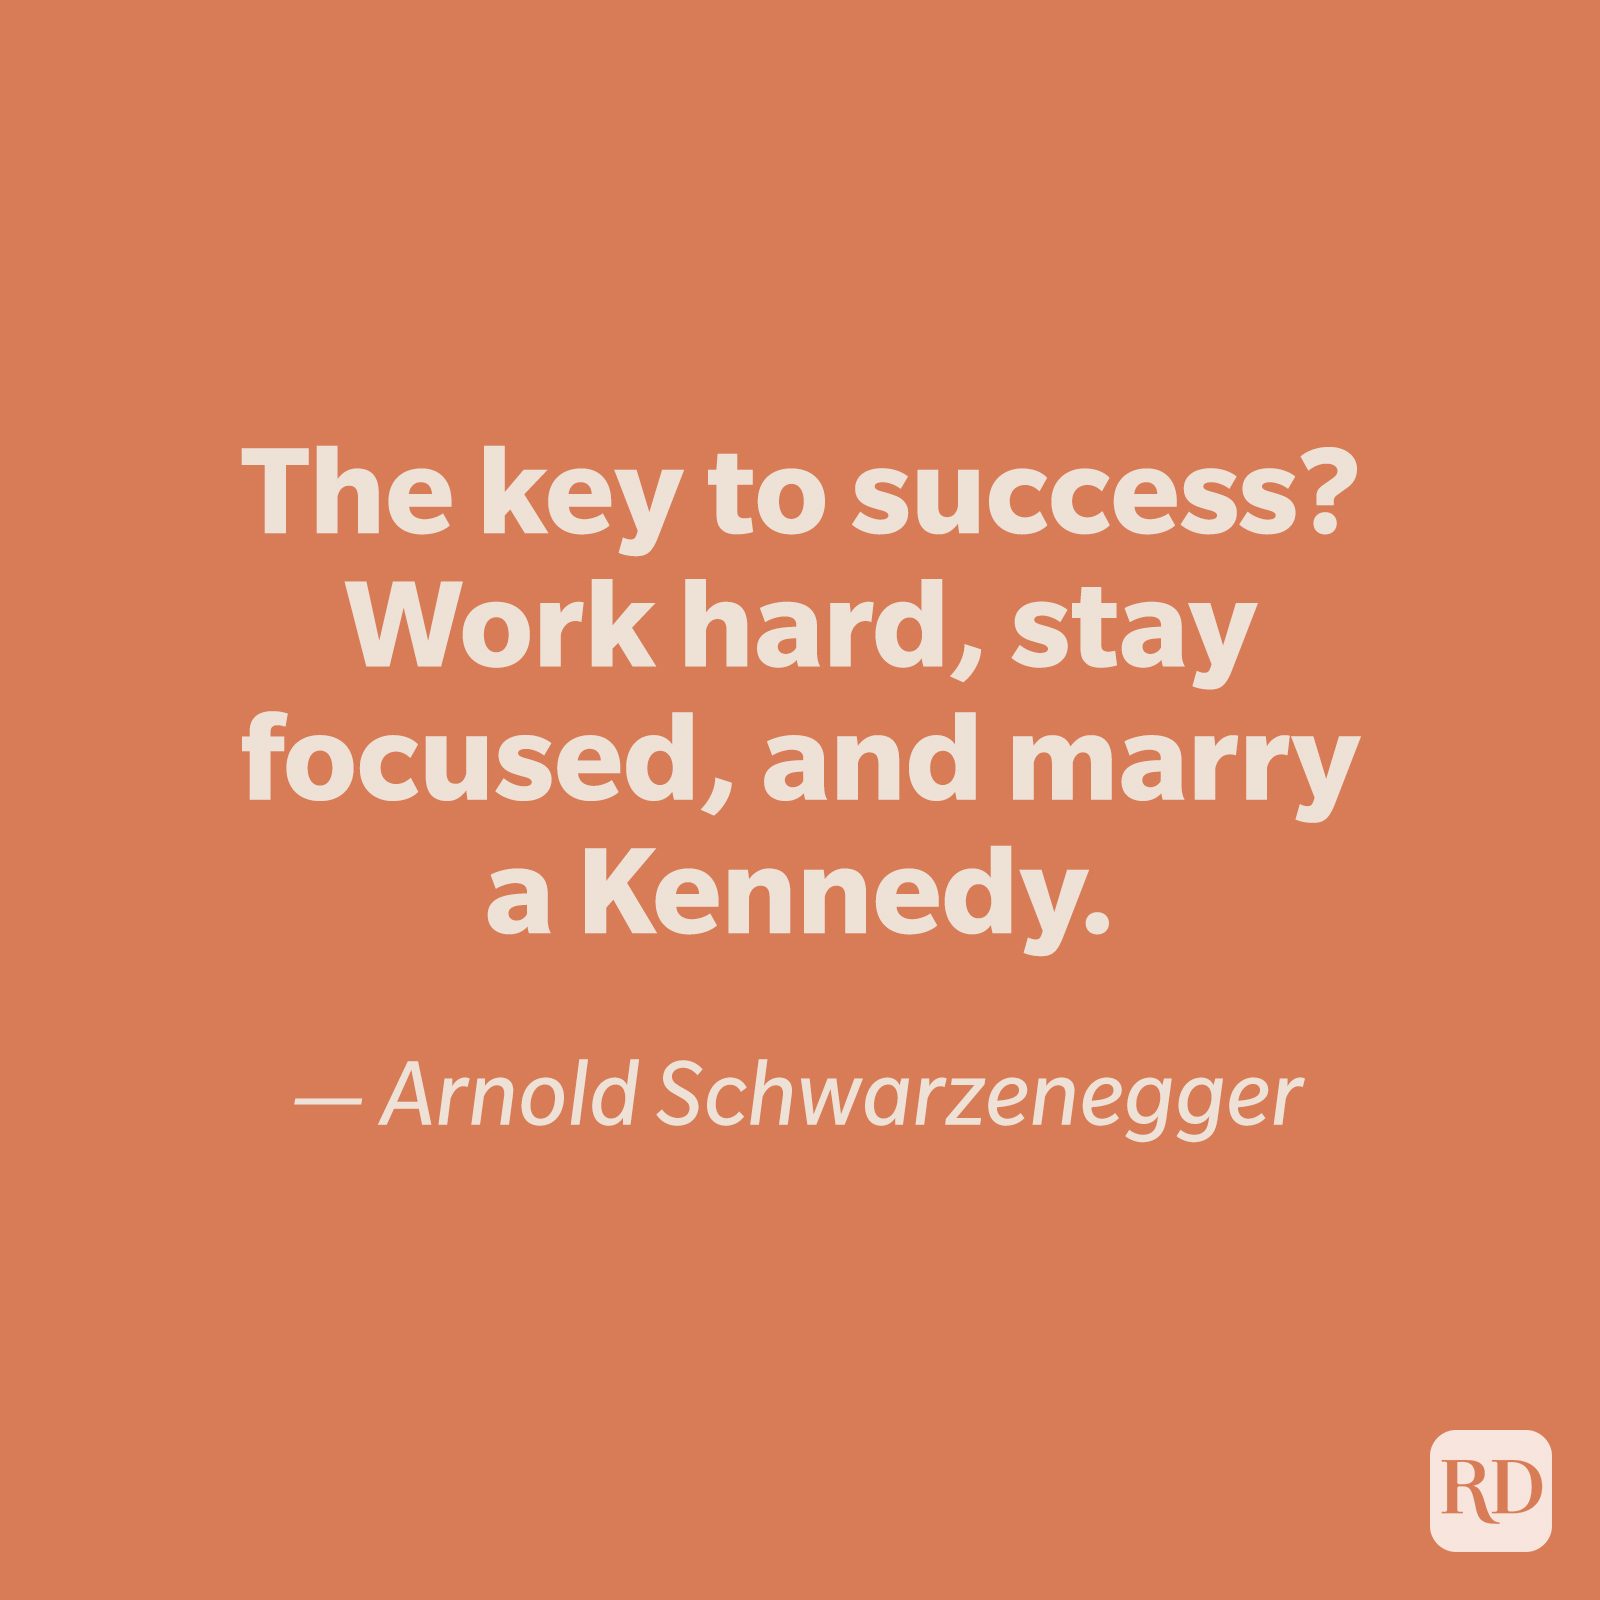 Arnold Schwarzenegger quote 